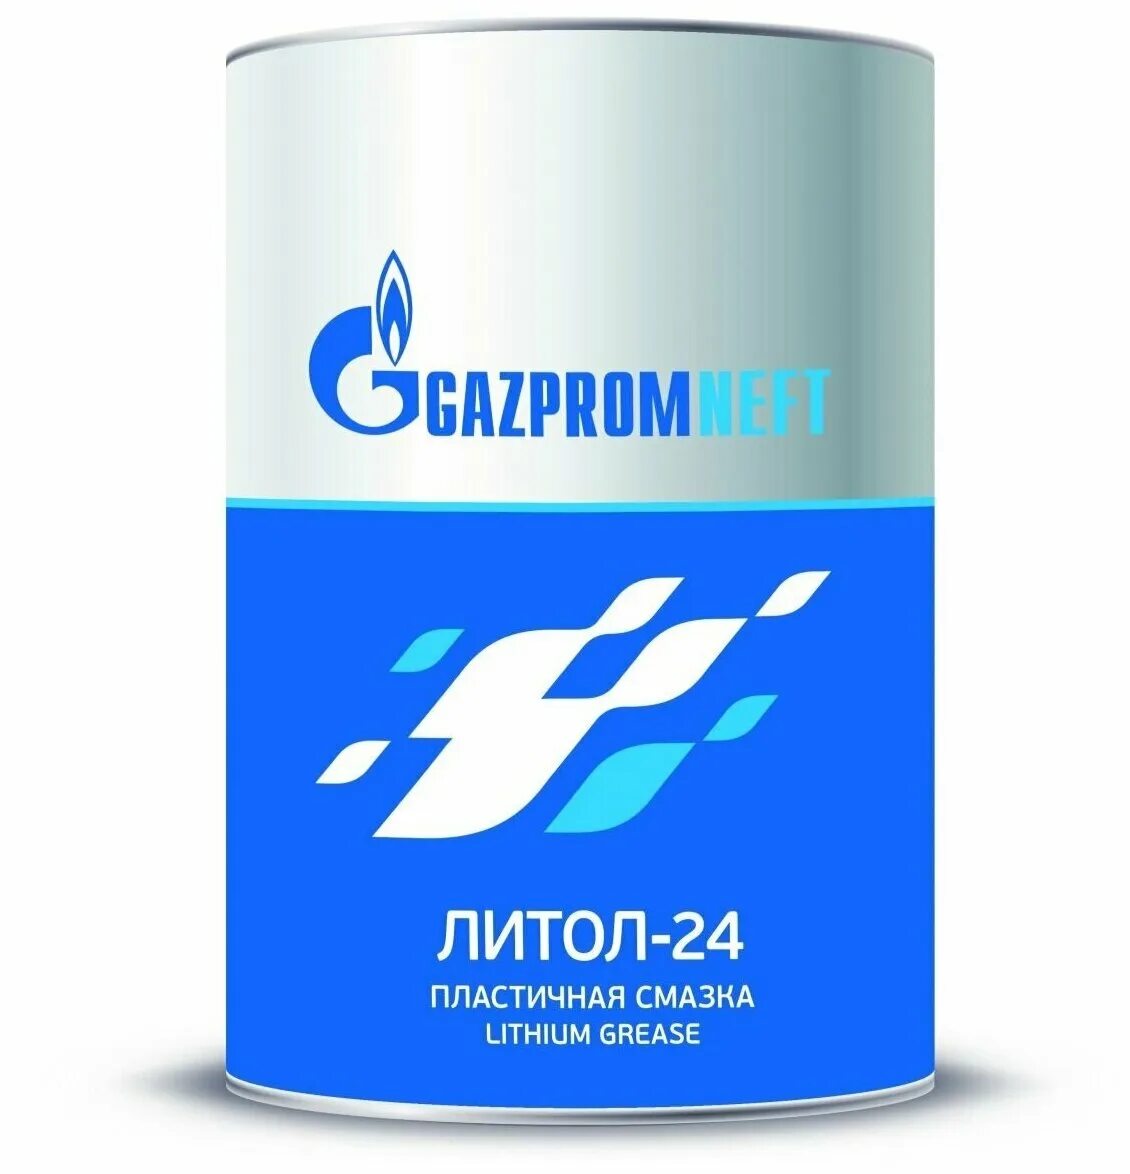 Газпромнефть артикул. Литол 24 Gazpromneft. Смазка литол-24. Смазка Gazpromneft литол-24 (800г).